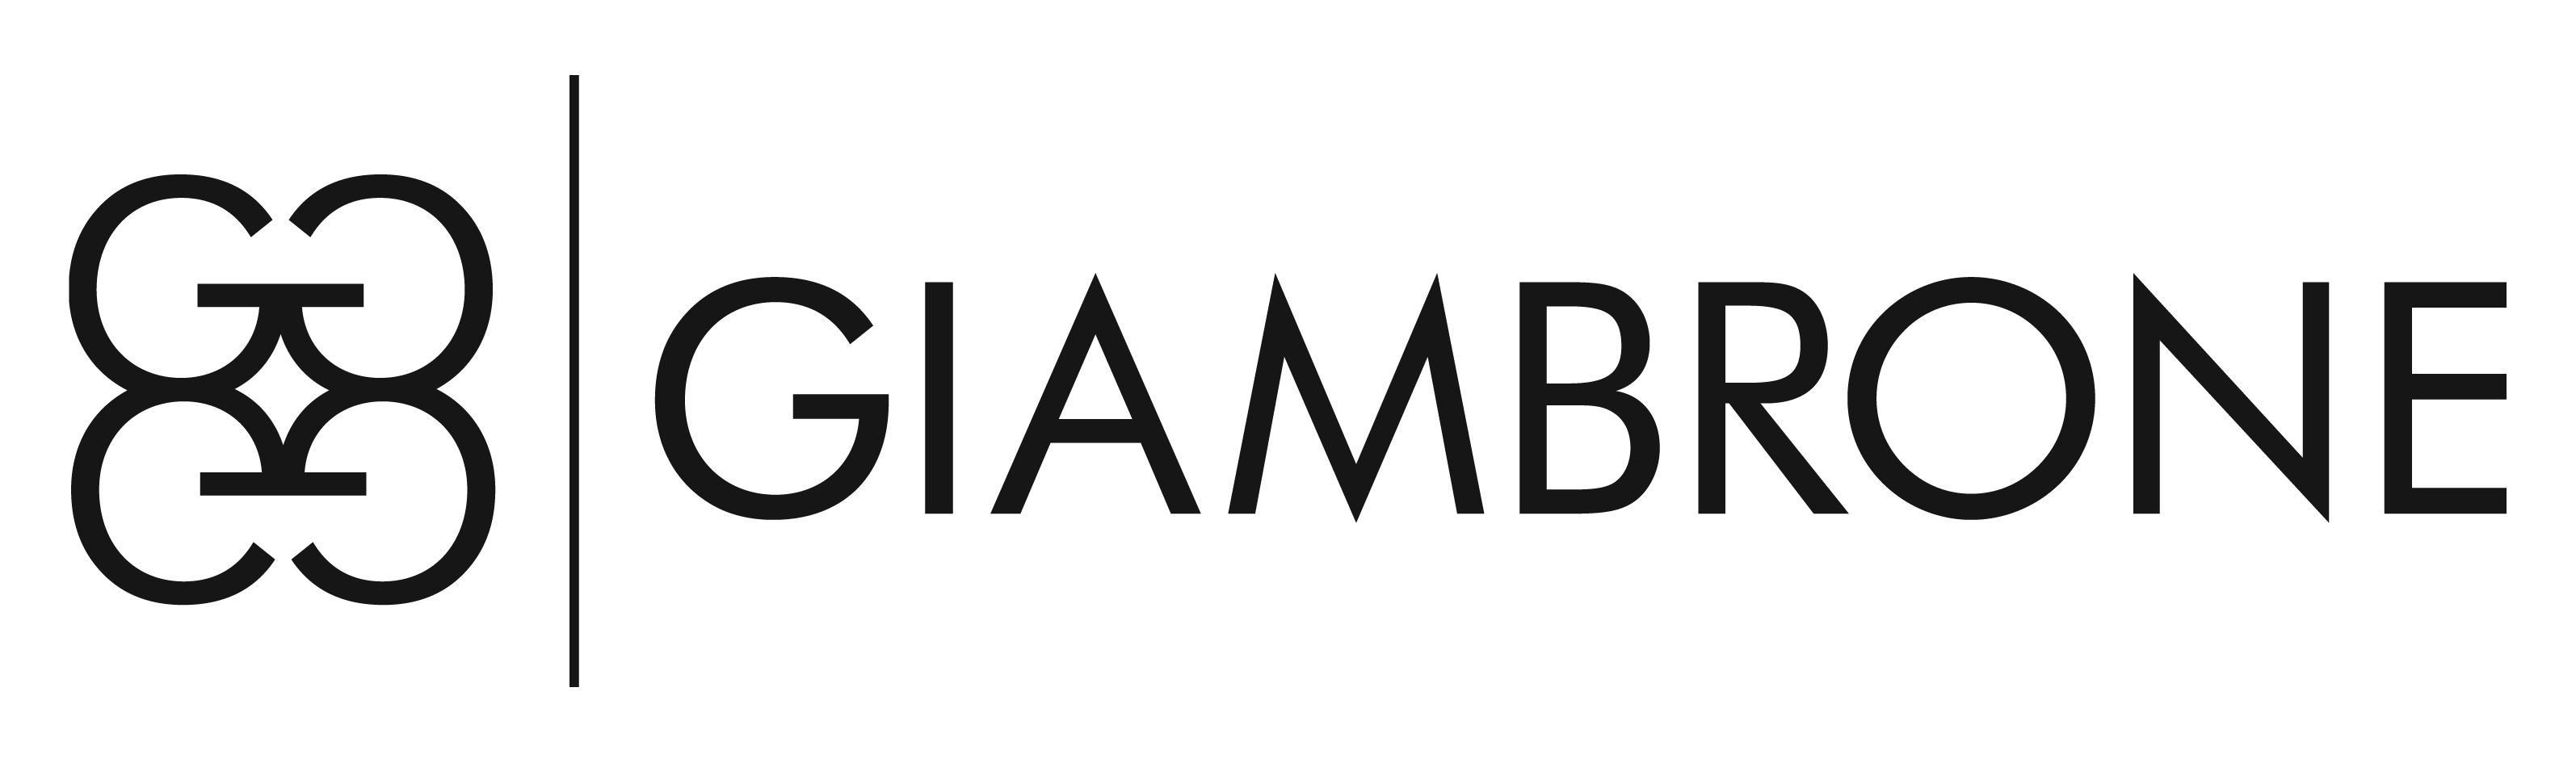 Giambrone & Partners - Studio Legale Associato logo